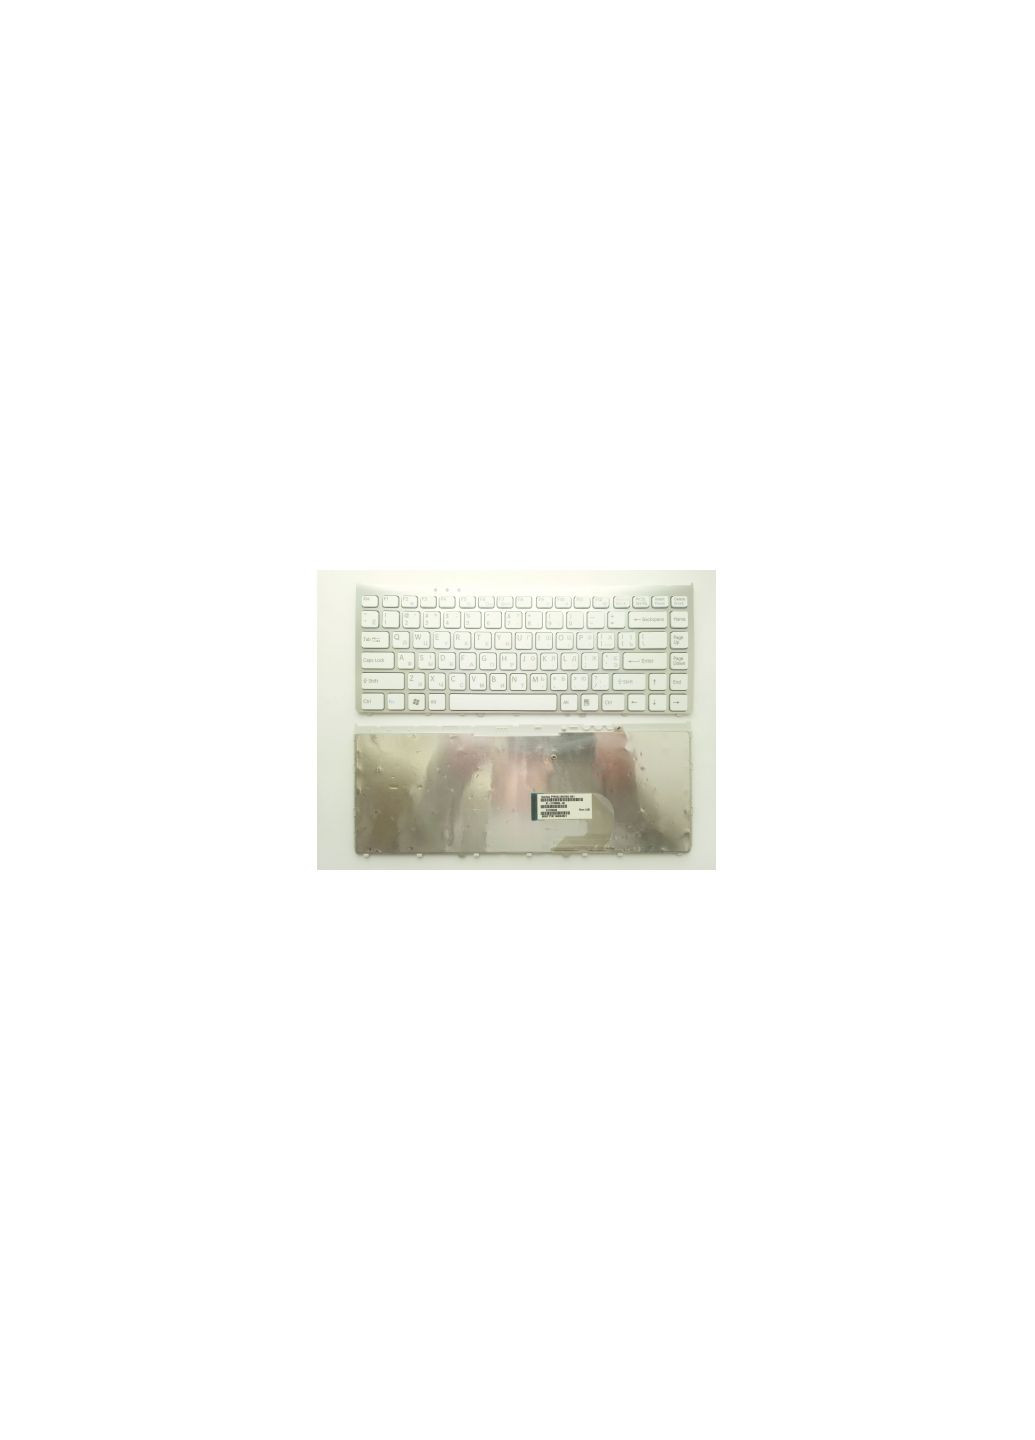 Клавиатура ноутбука VGNFW белая UA (A43345) Sony vgn-fw series белая ua (276706397)